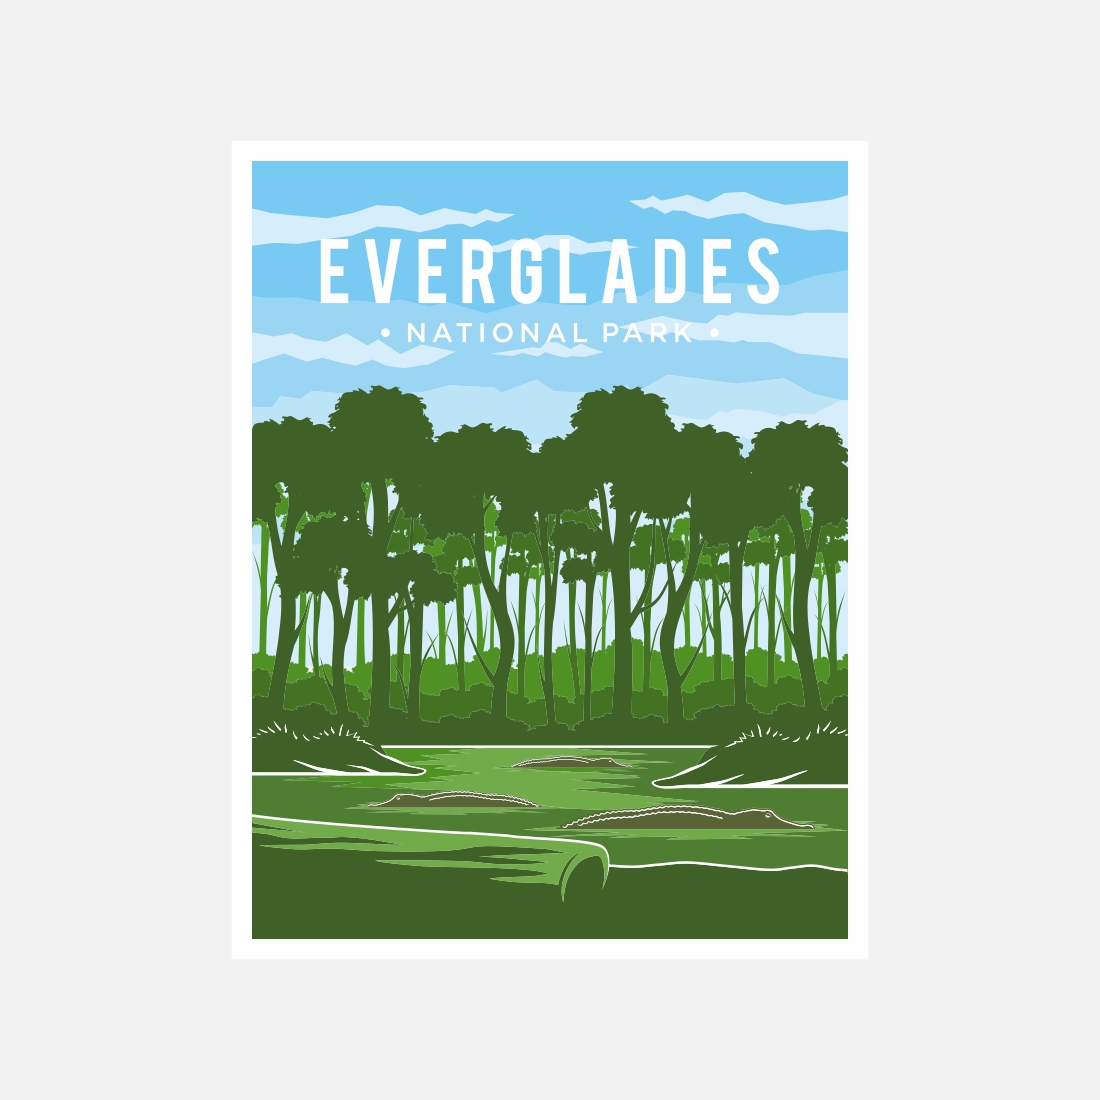 Everglades National Park poster vector illustration design – Only $8 cover image.